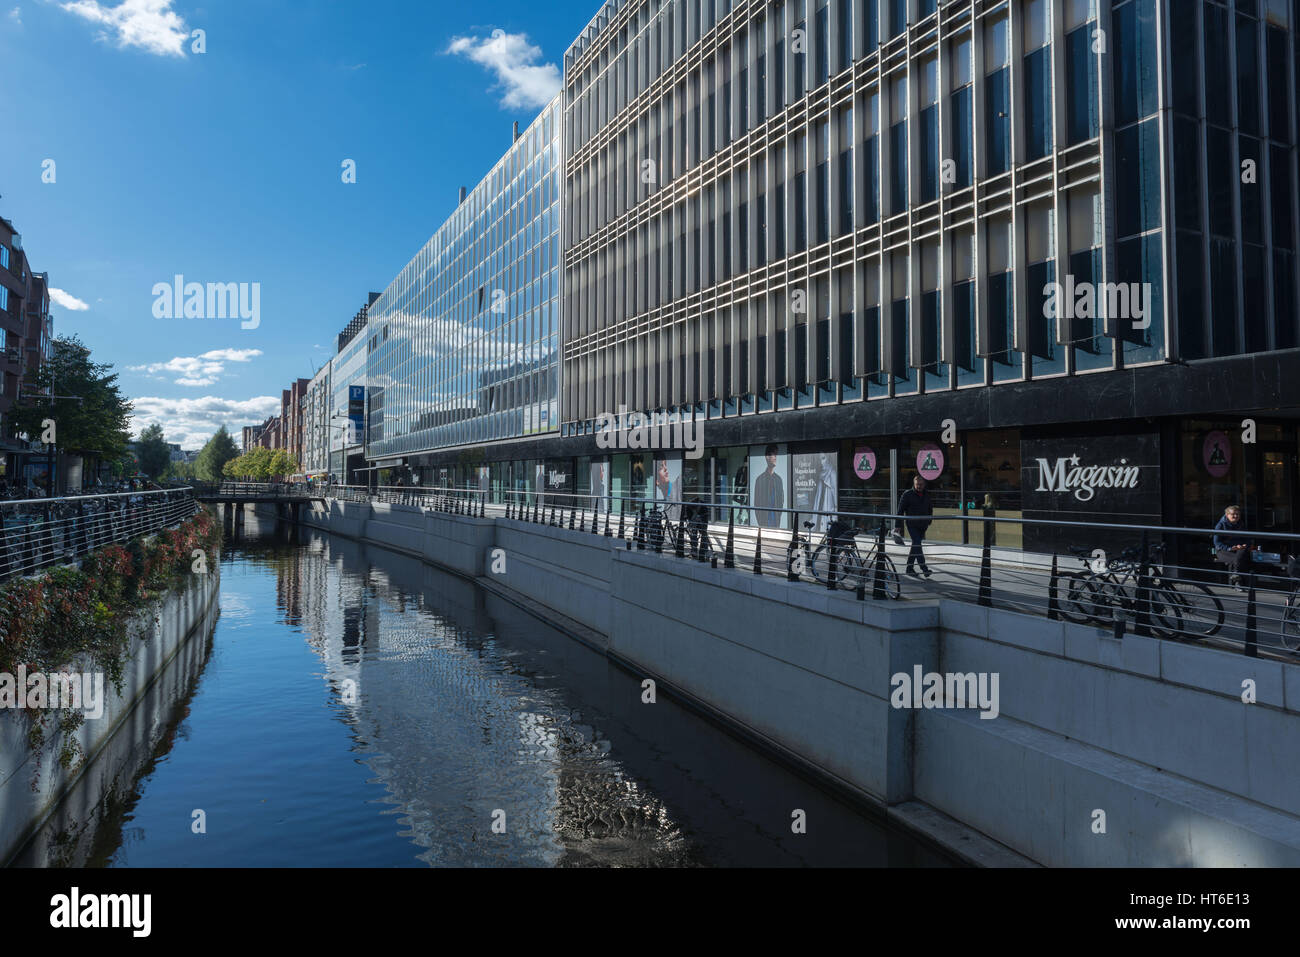 Magasin shopping venter, Aarhus, European Cultural City in 2017, Northern Jutland, Denmark Stock Photo